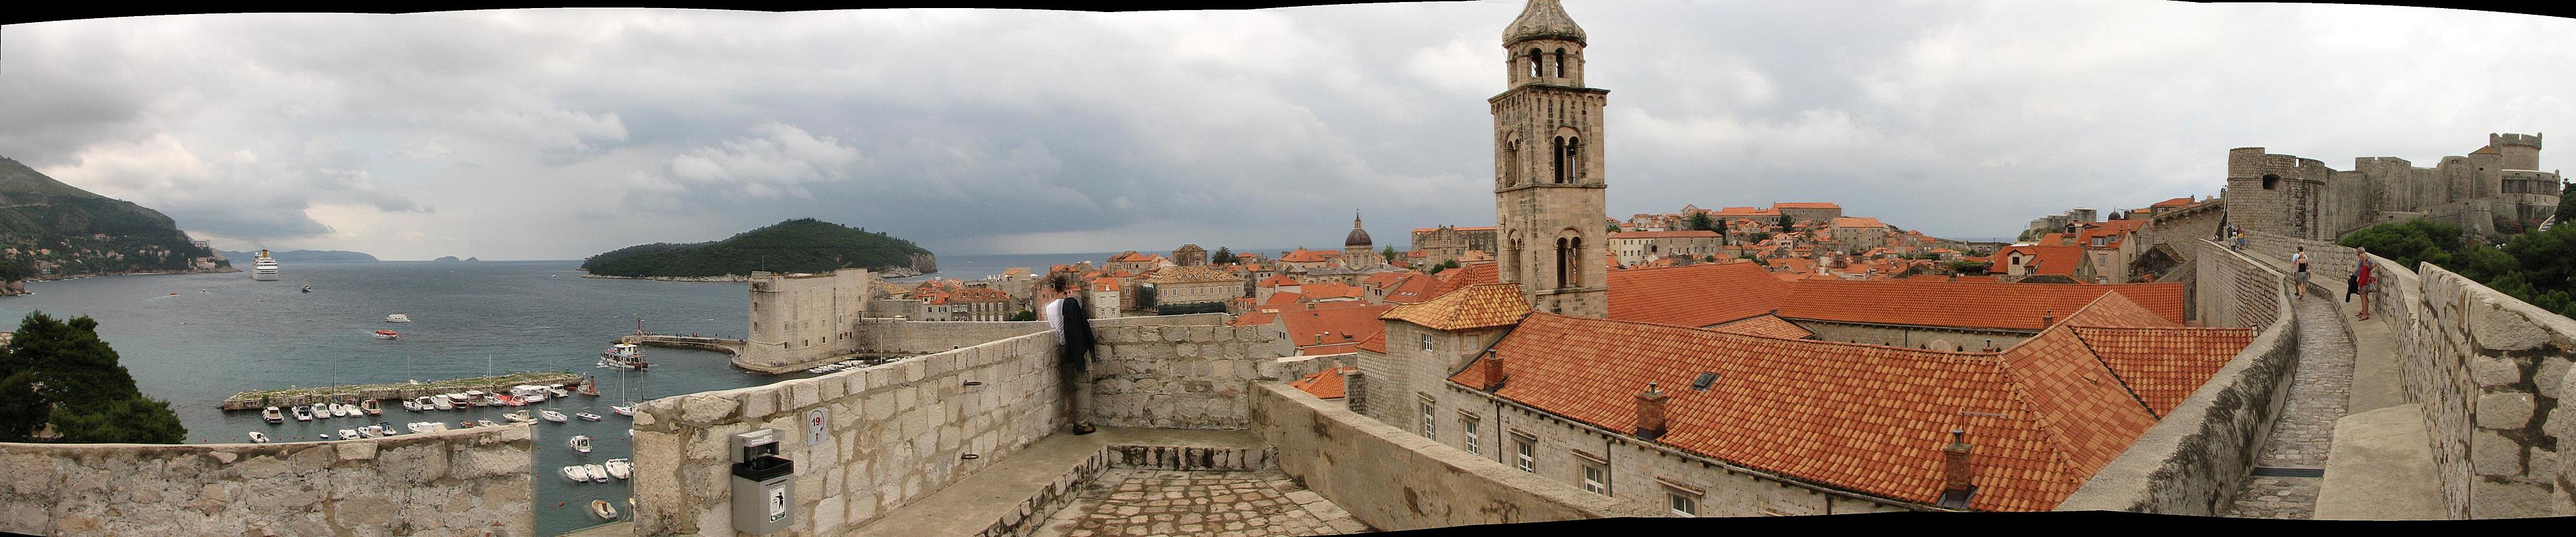 Dubrovnik vanha kaupunki panoraama